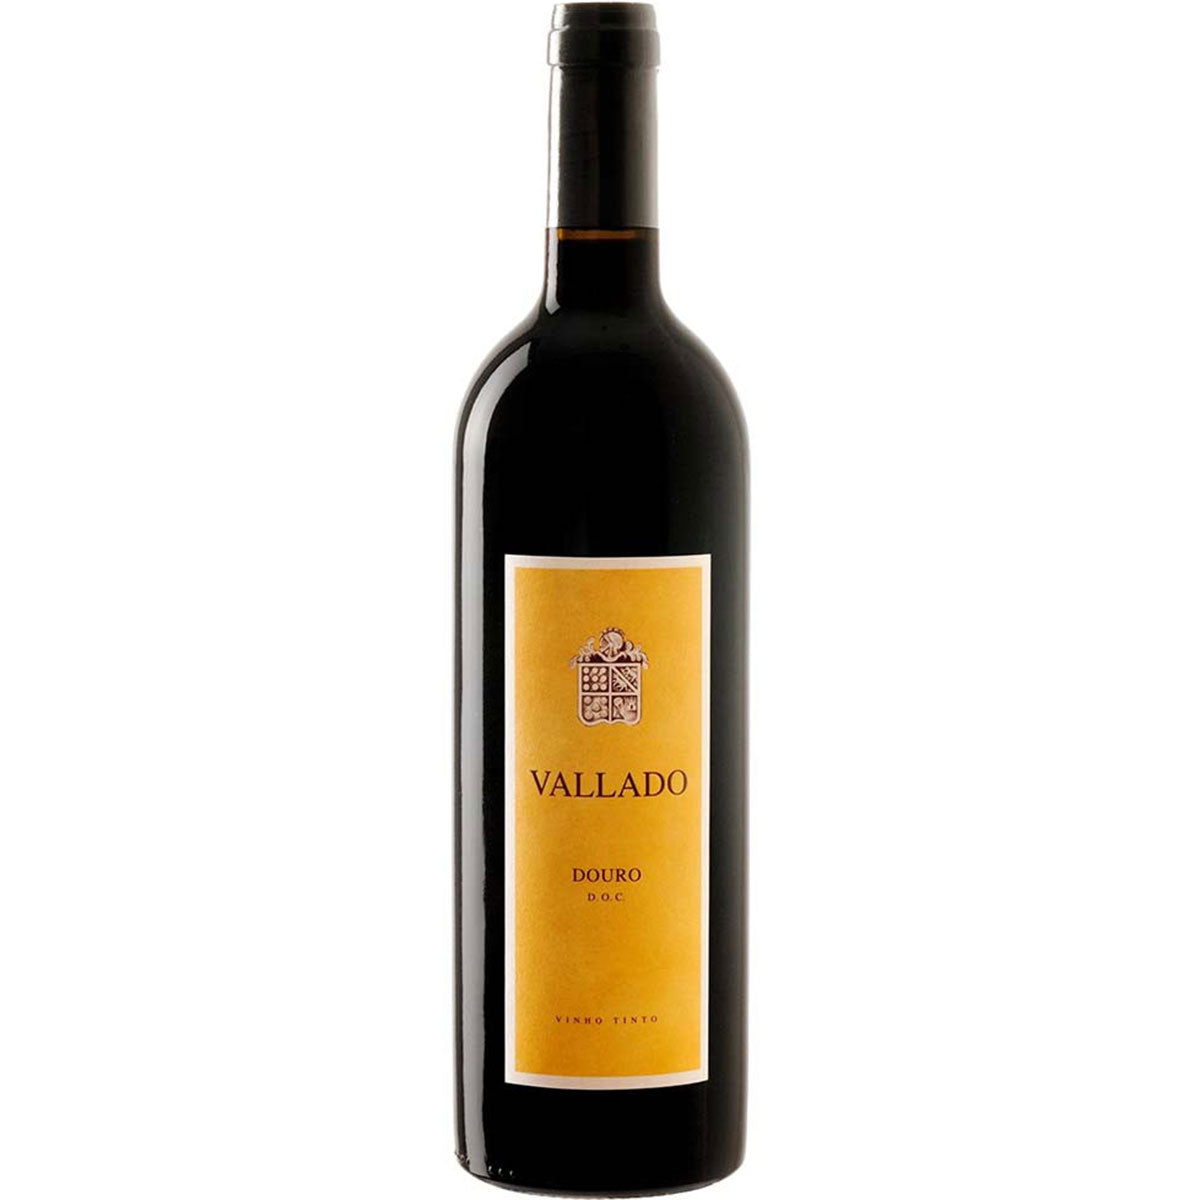 Vallado Douro Vinho Tinto 2019